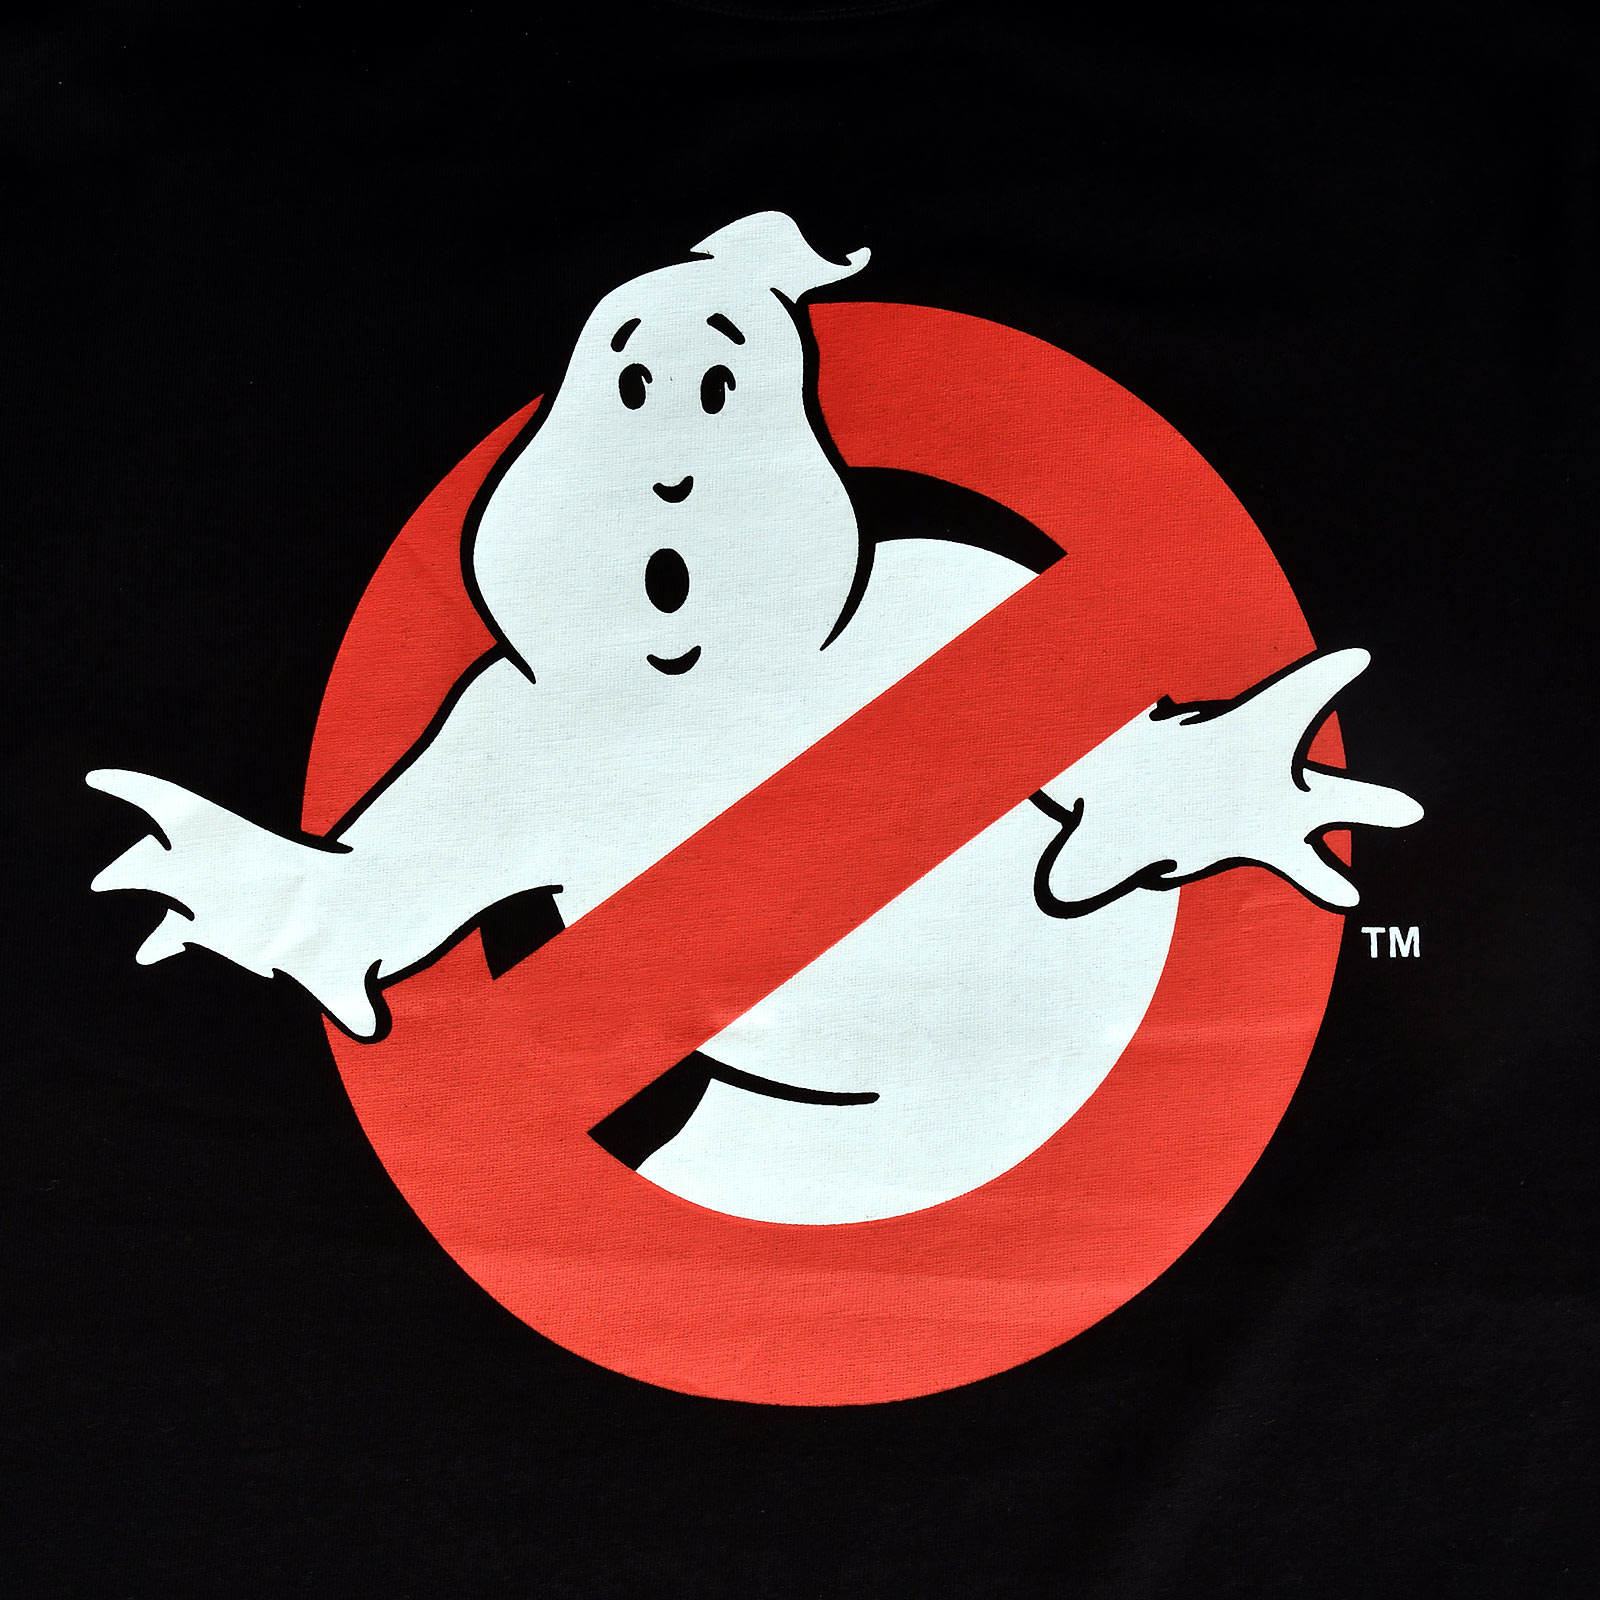 Ghostbusters - T-shirt logo noir